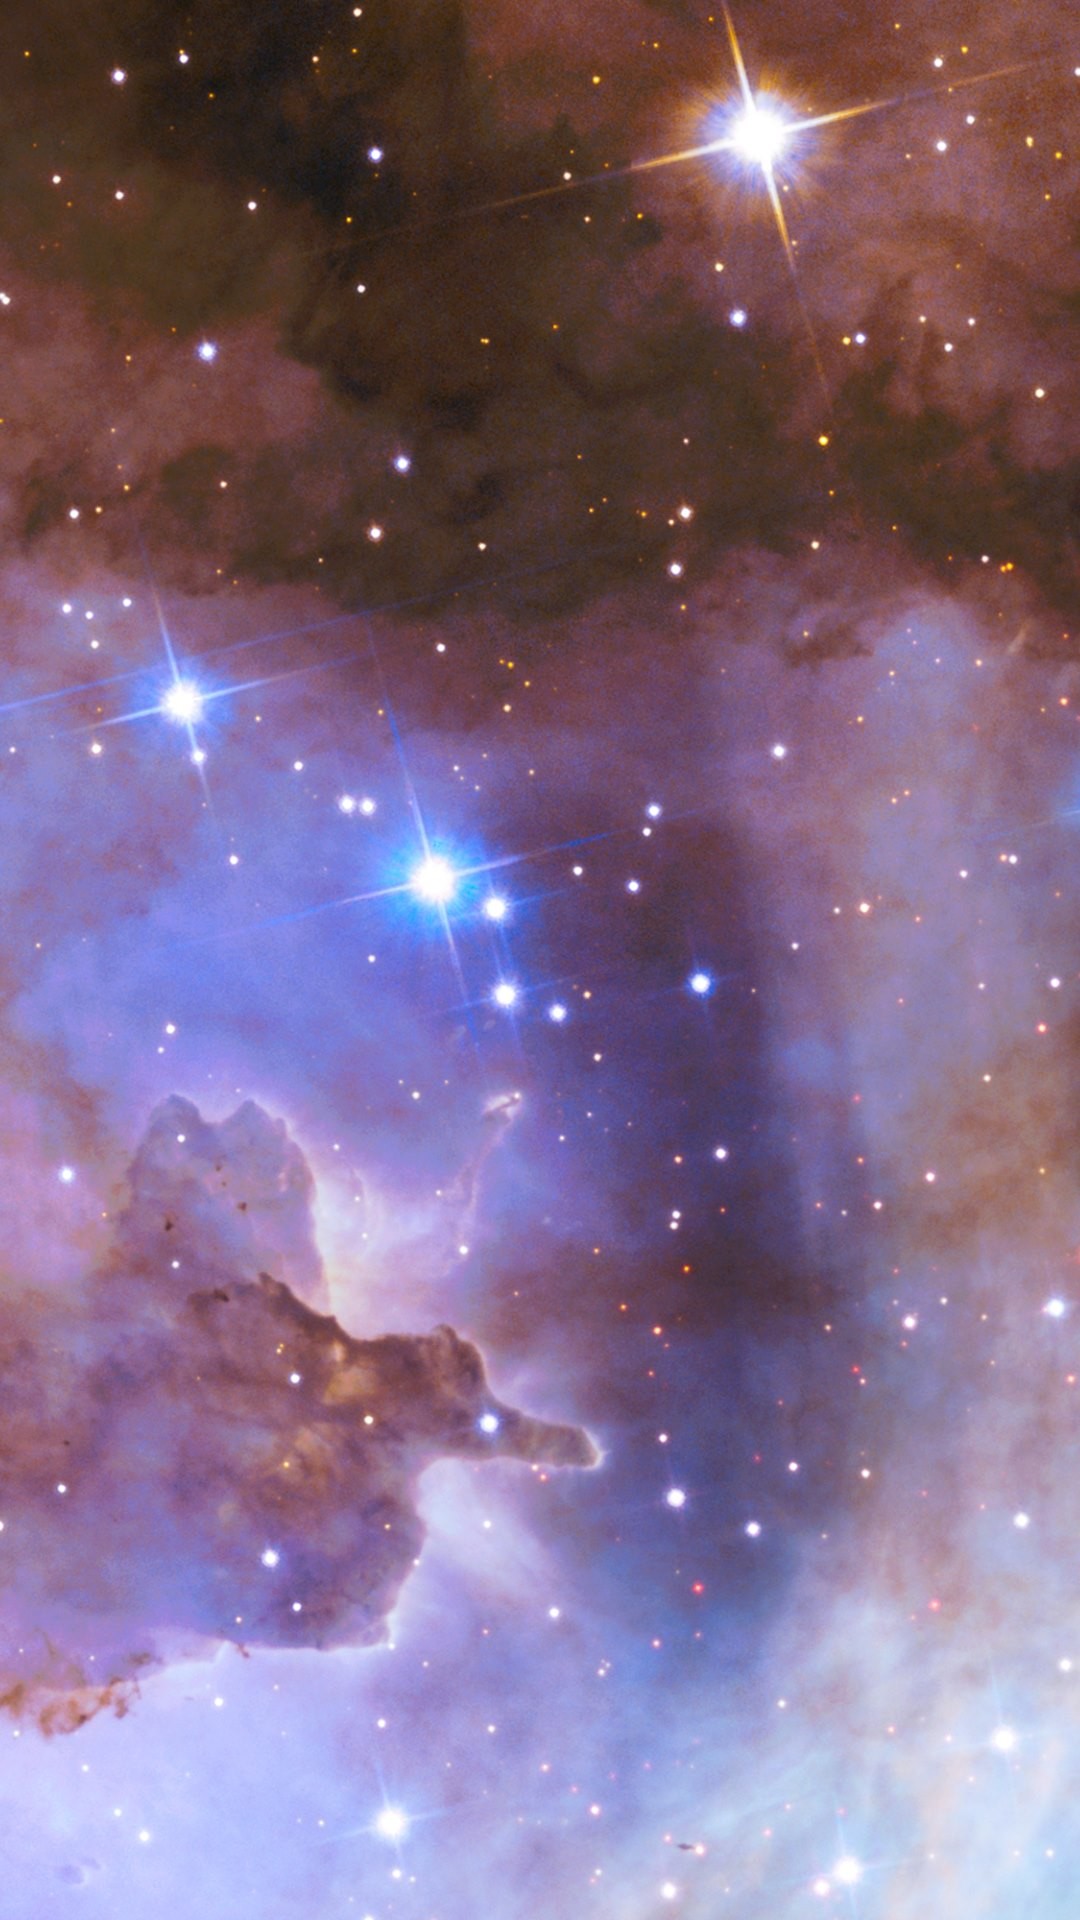 1080x1920 Wallpaper 2: Hubble Space Telescope Celebrates 25 Years